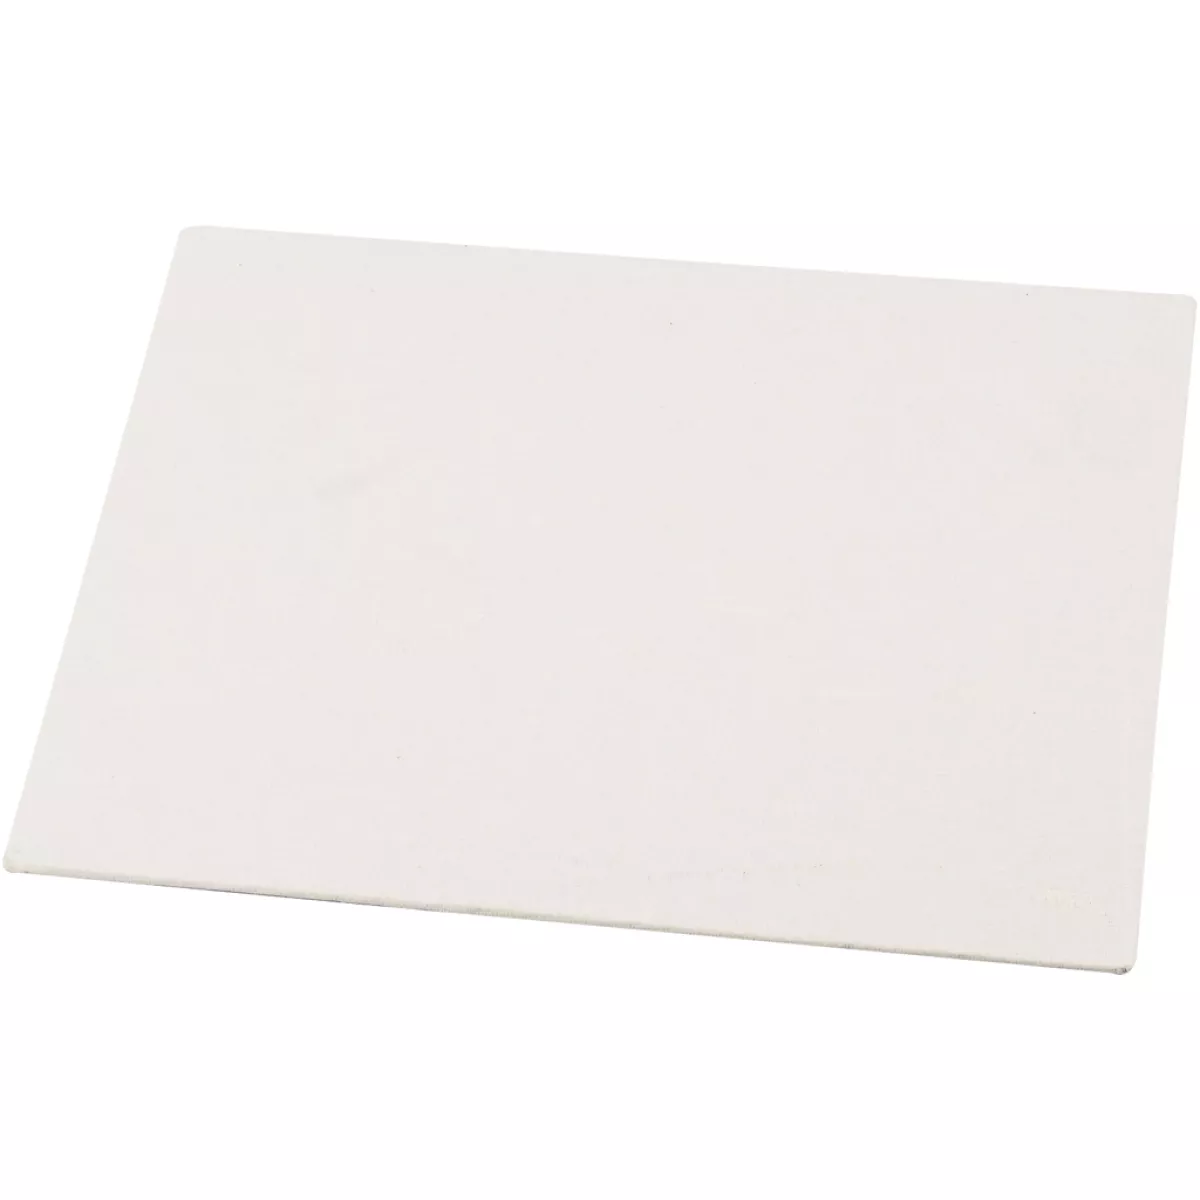 #1 - Malerplade, str. 18x24 cm, 280 g, hvid, 1 stk.